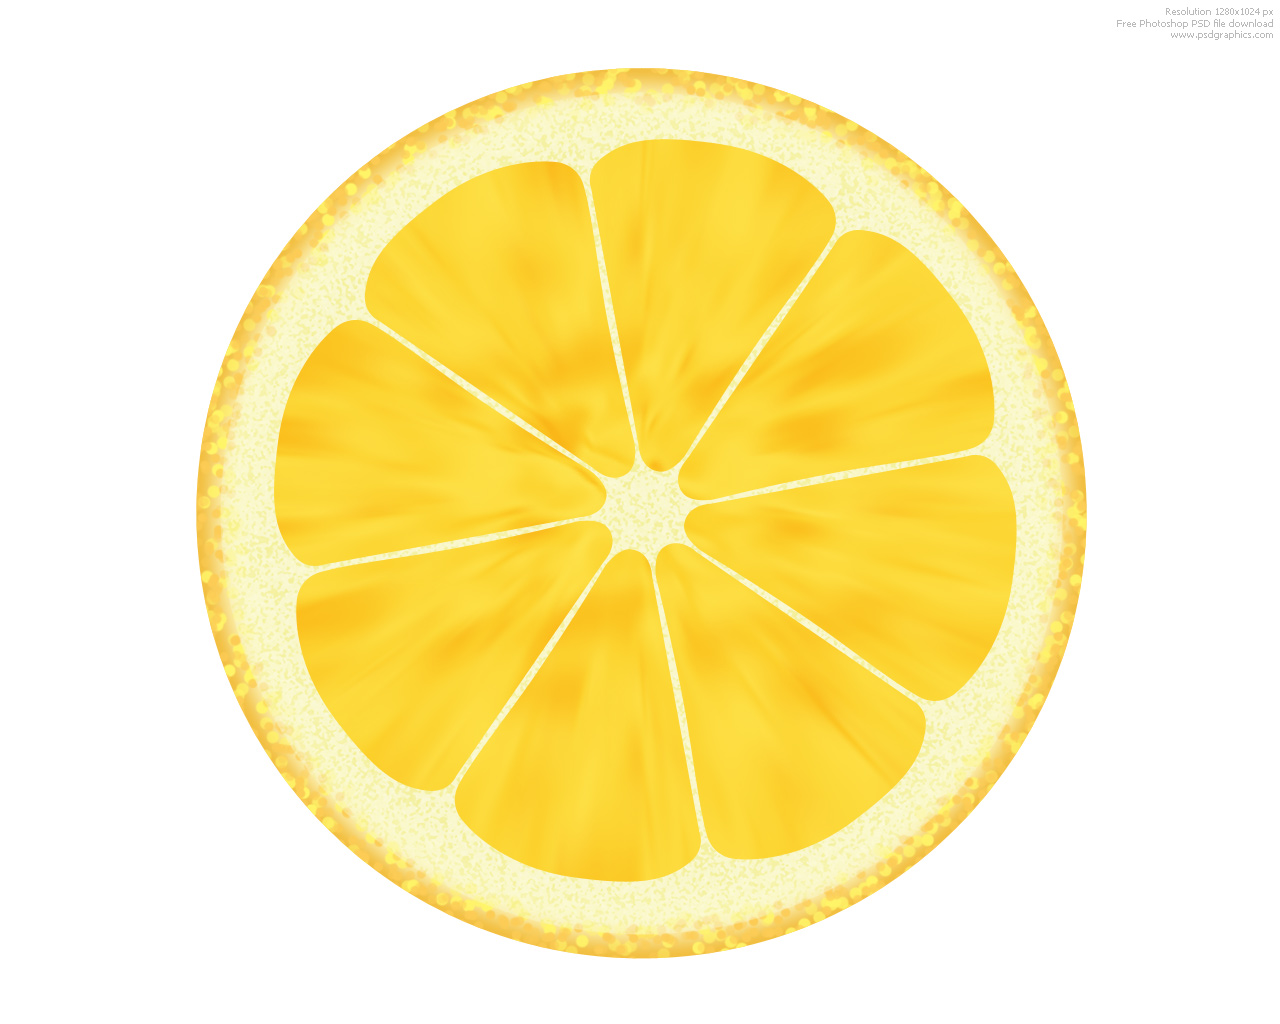 Lemon Slice Graphic